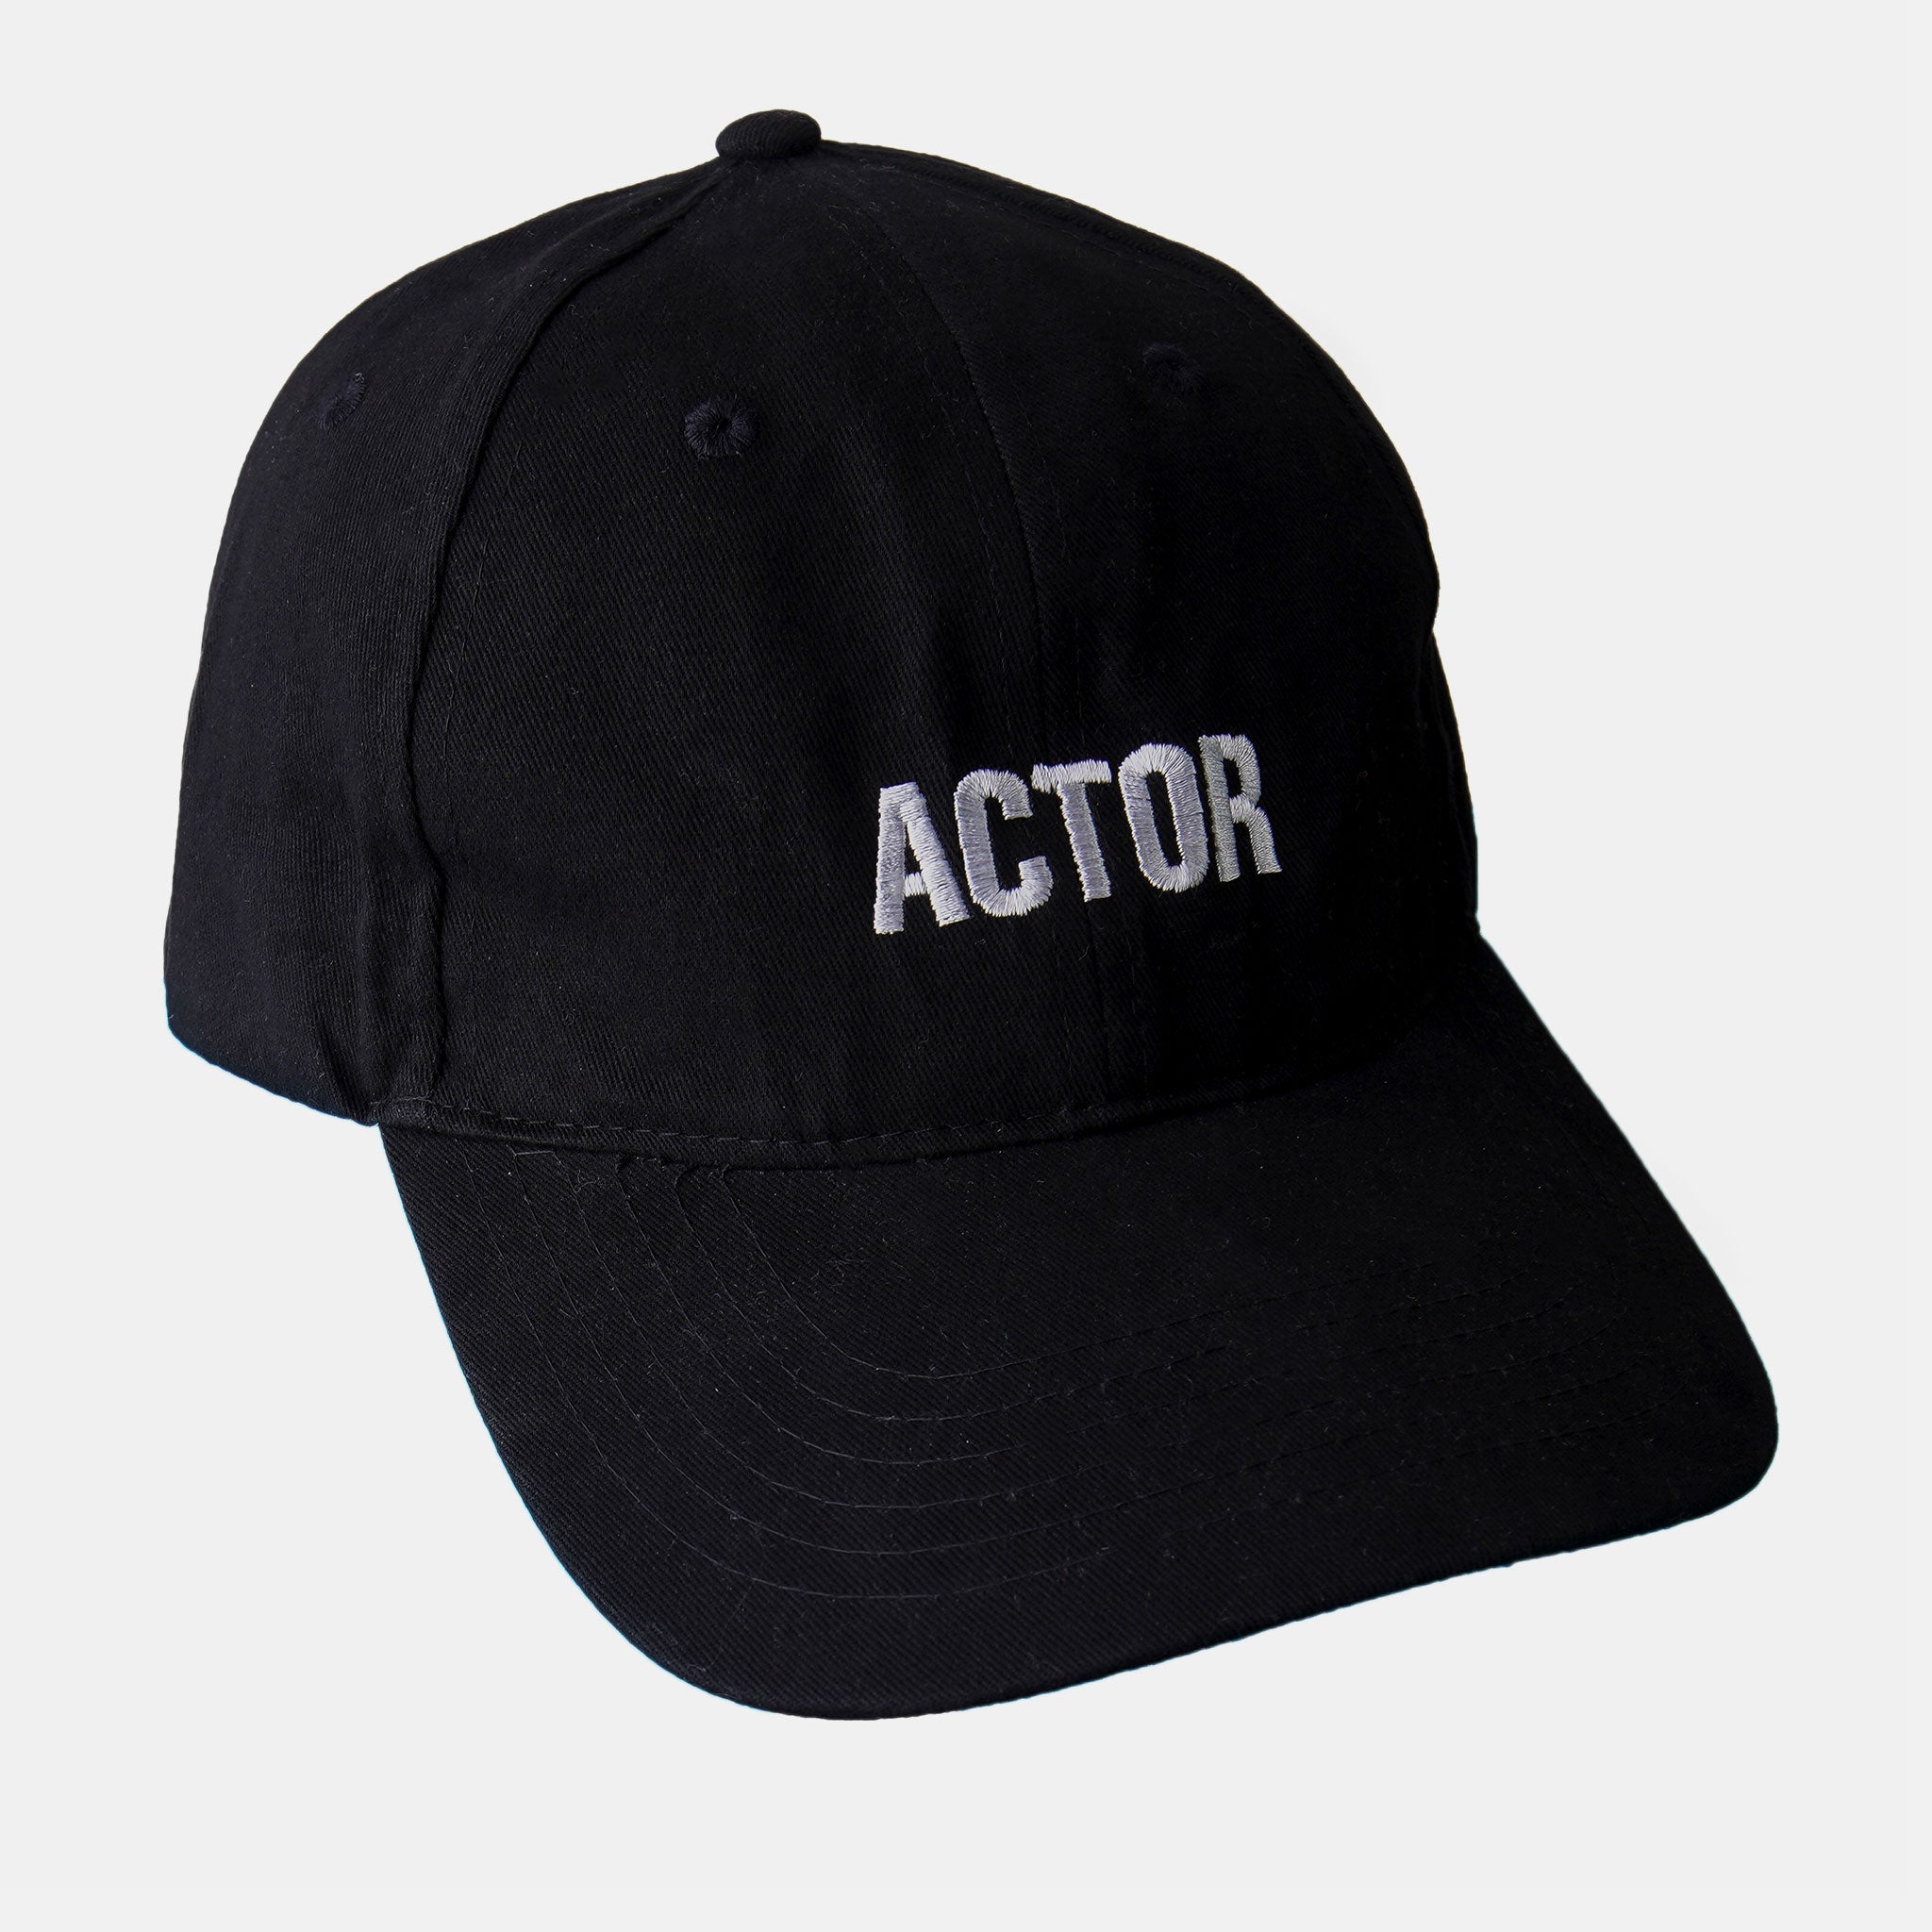 destination-psp-film-role-baseball-caps-actor.jpg